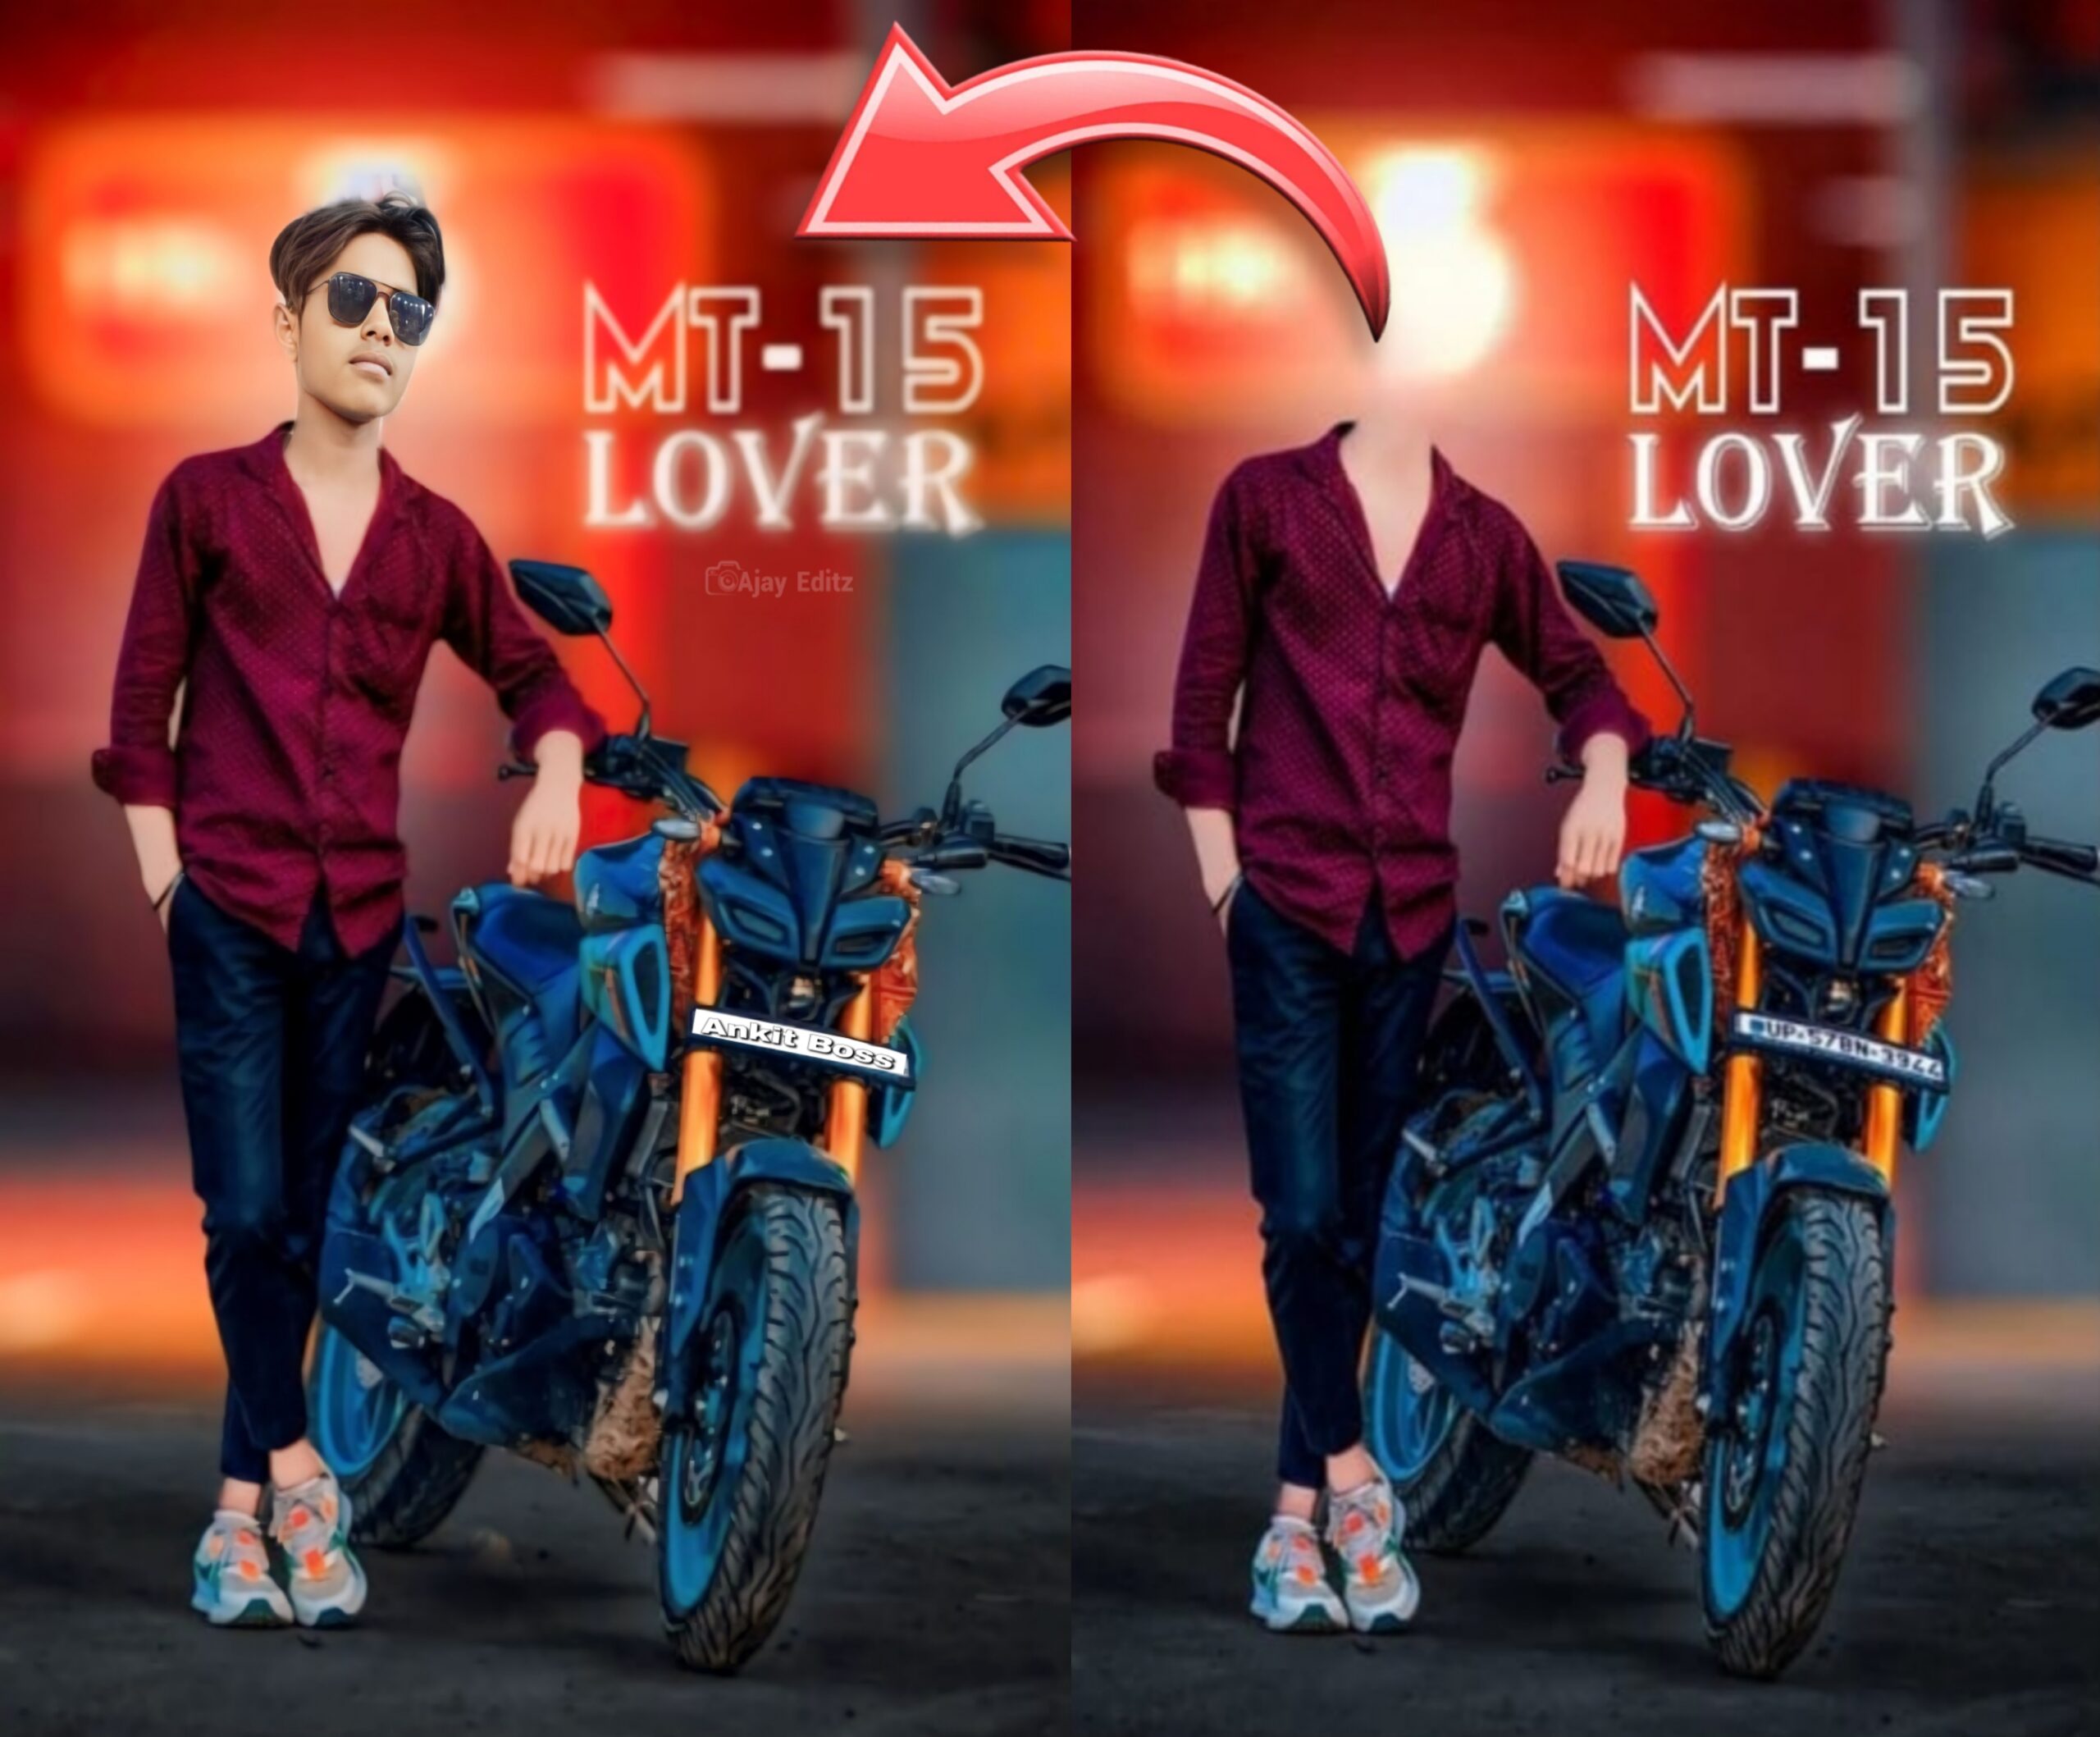 KTM Bike Rider,india added a new photo. - KTM Bike Rider,india